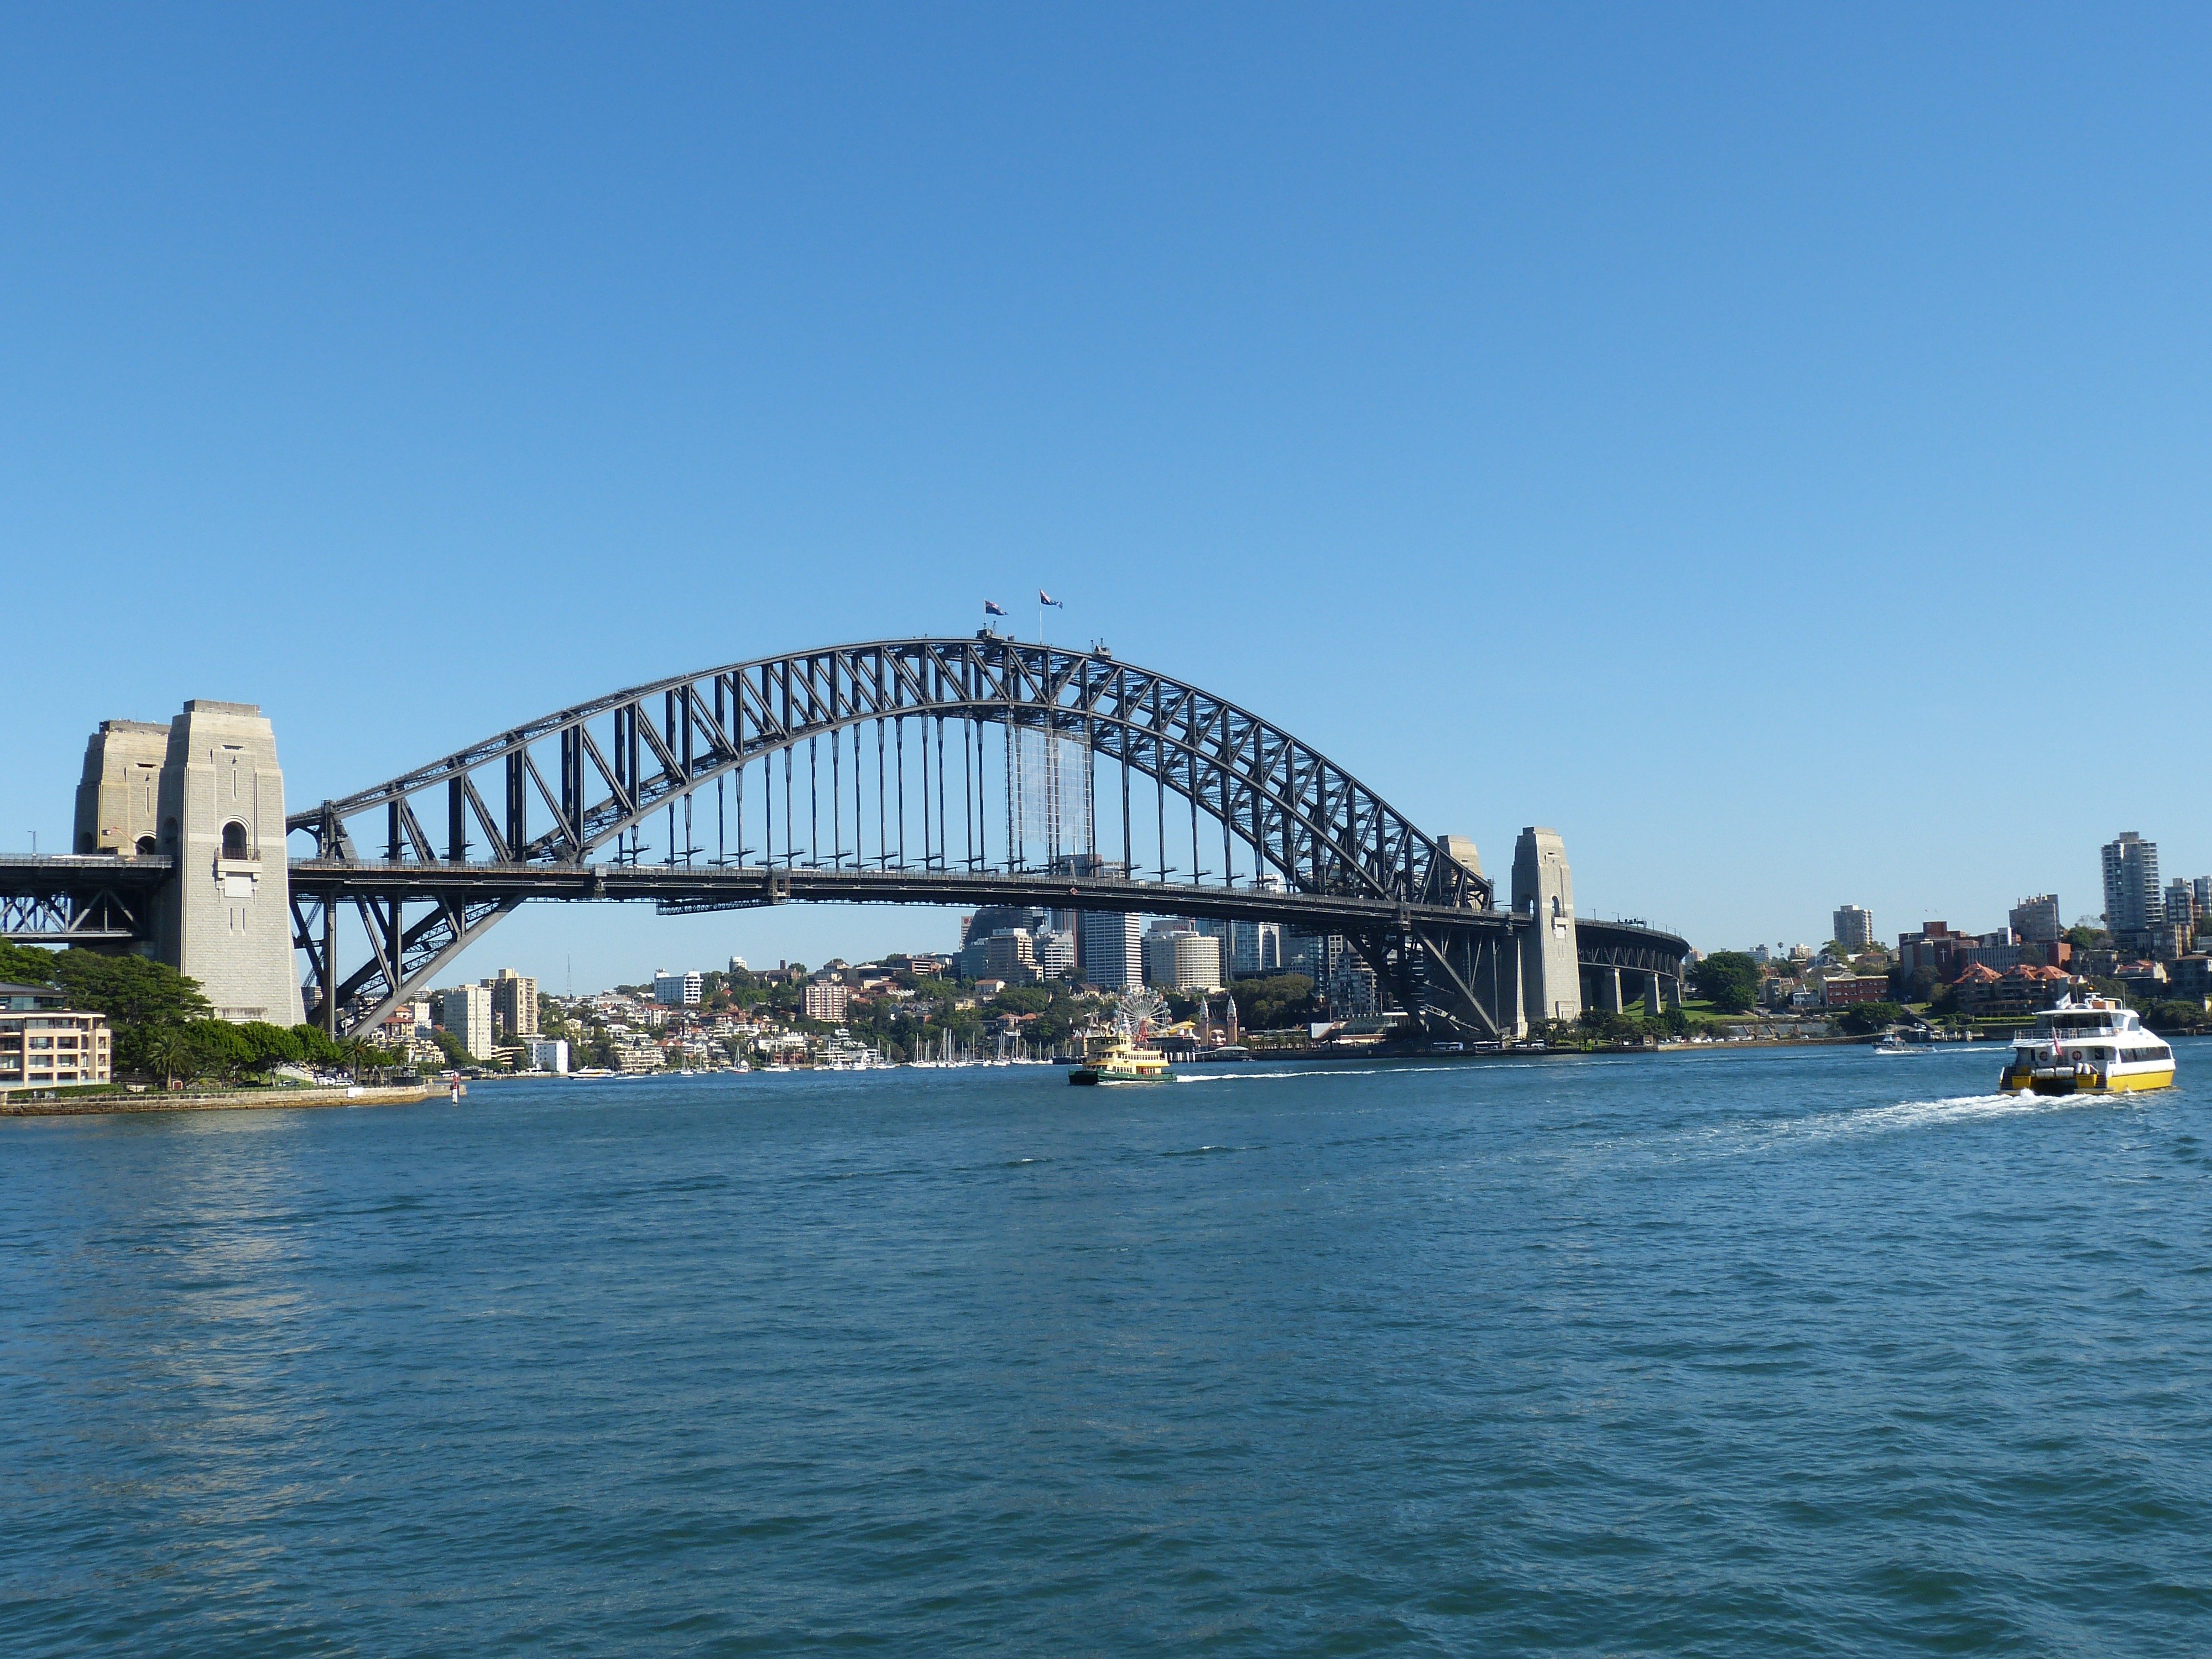 Harbour bridge. Харбор-бридж Сидней. Мост Харбор-бридж в Сиднее. Харбор-бридж (Сидней, Австралия). Мост Харбор бридж в Австралии.